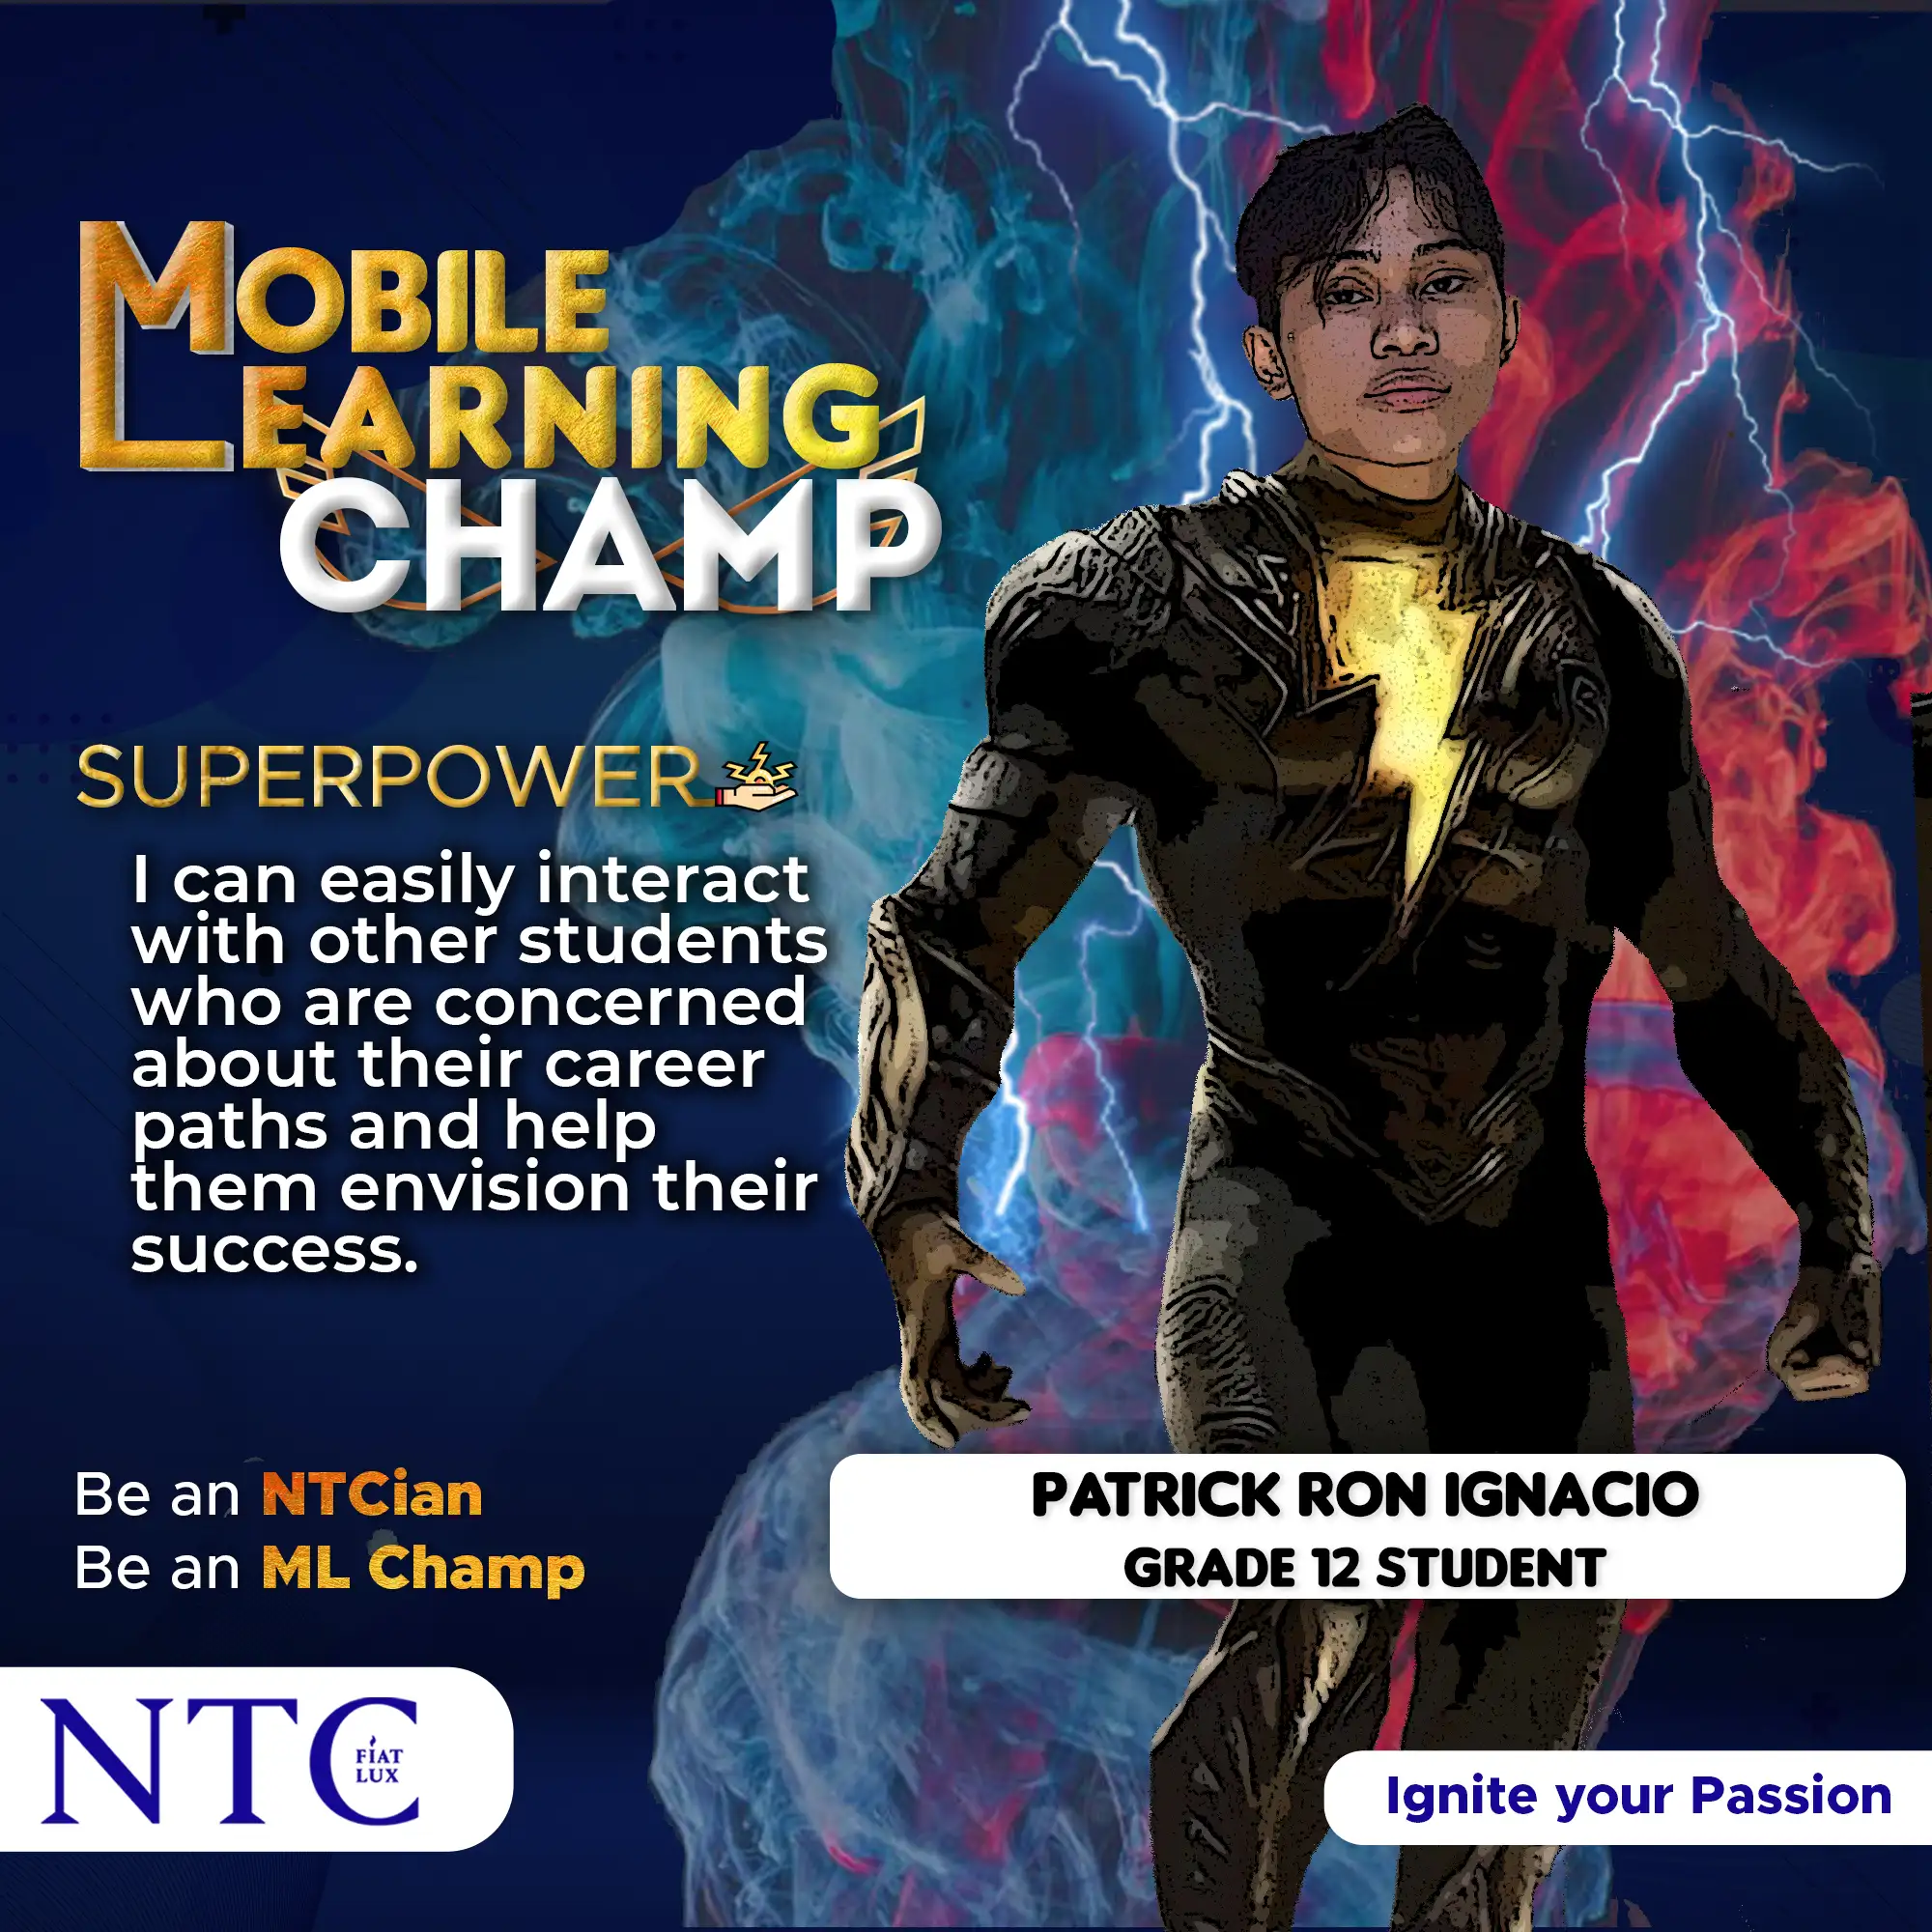 ML Champ Patrick Ron Ignacio